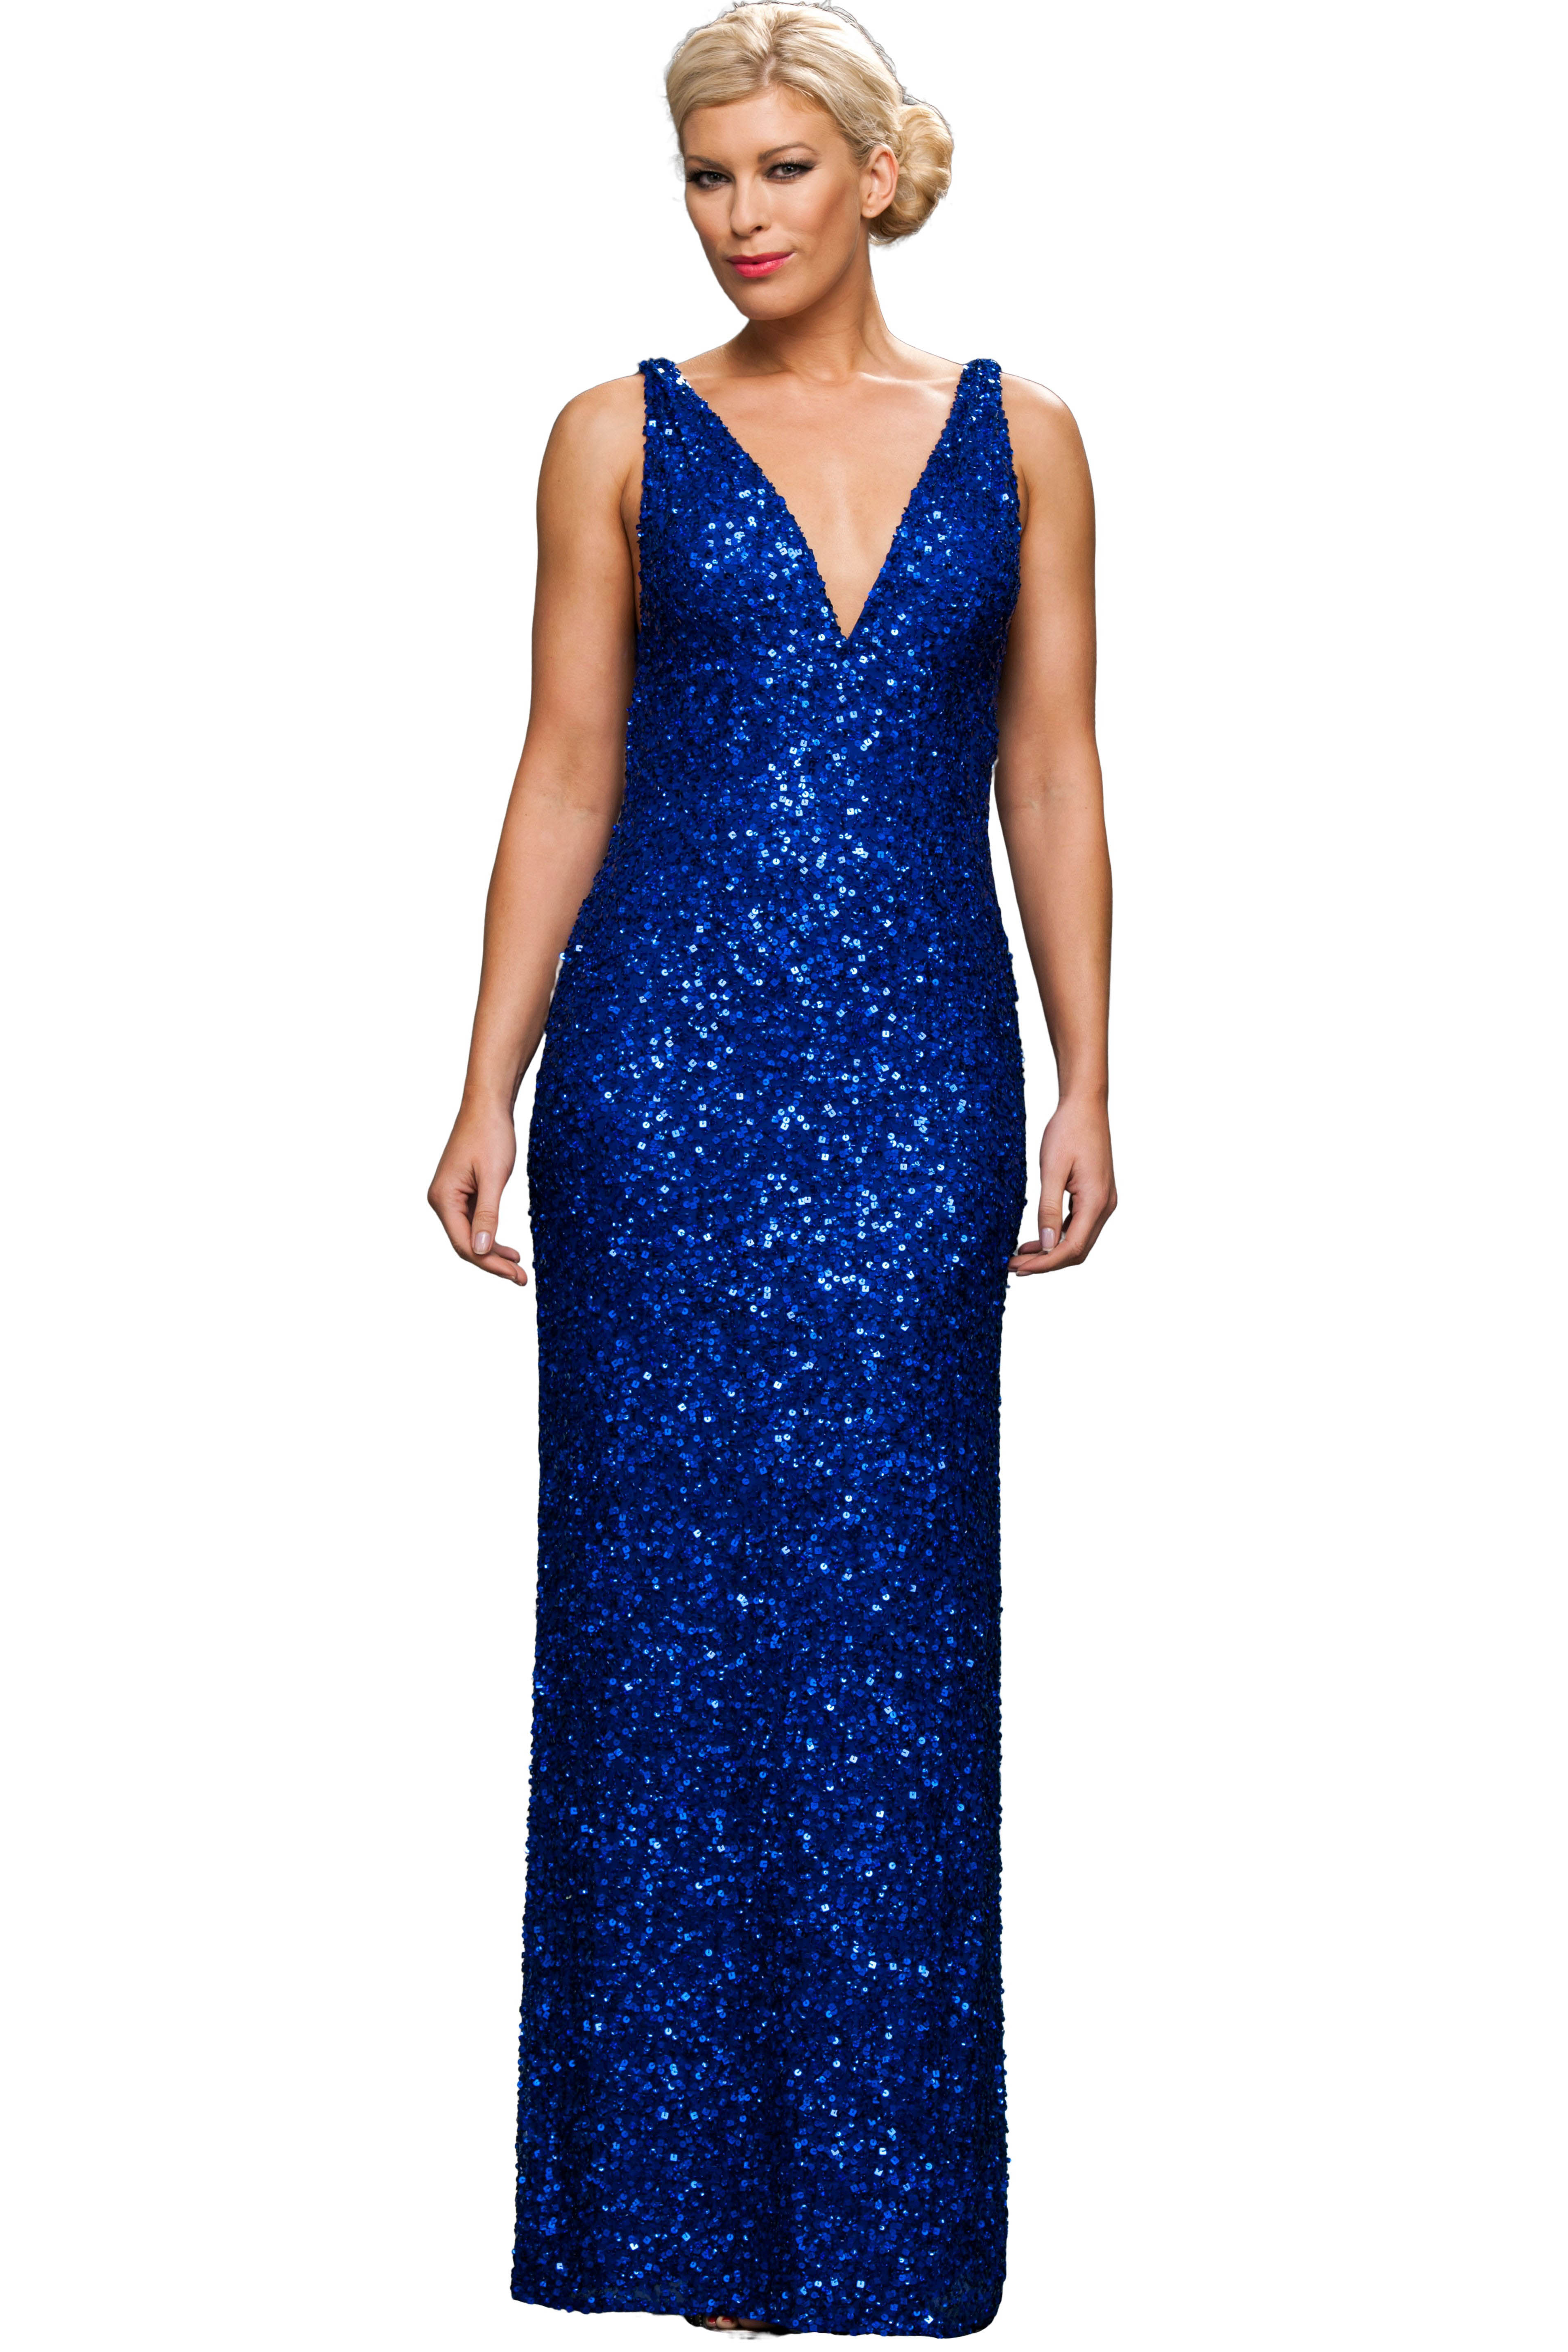 Buy FashionNaari Women's Rayon Long Kurti with Back Neck Design (Navy Blue;  XXL) at Amazon.in